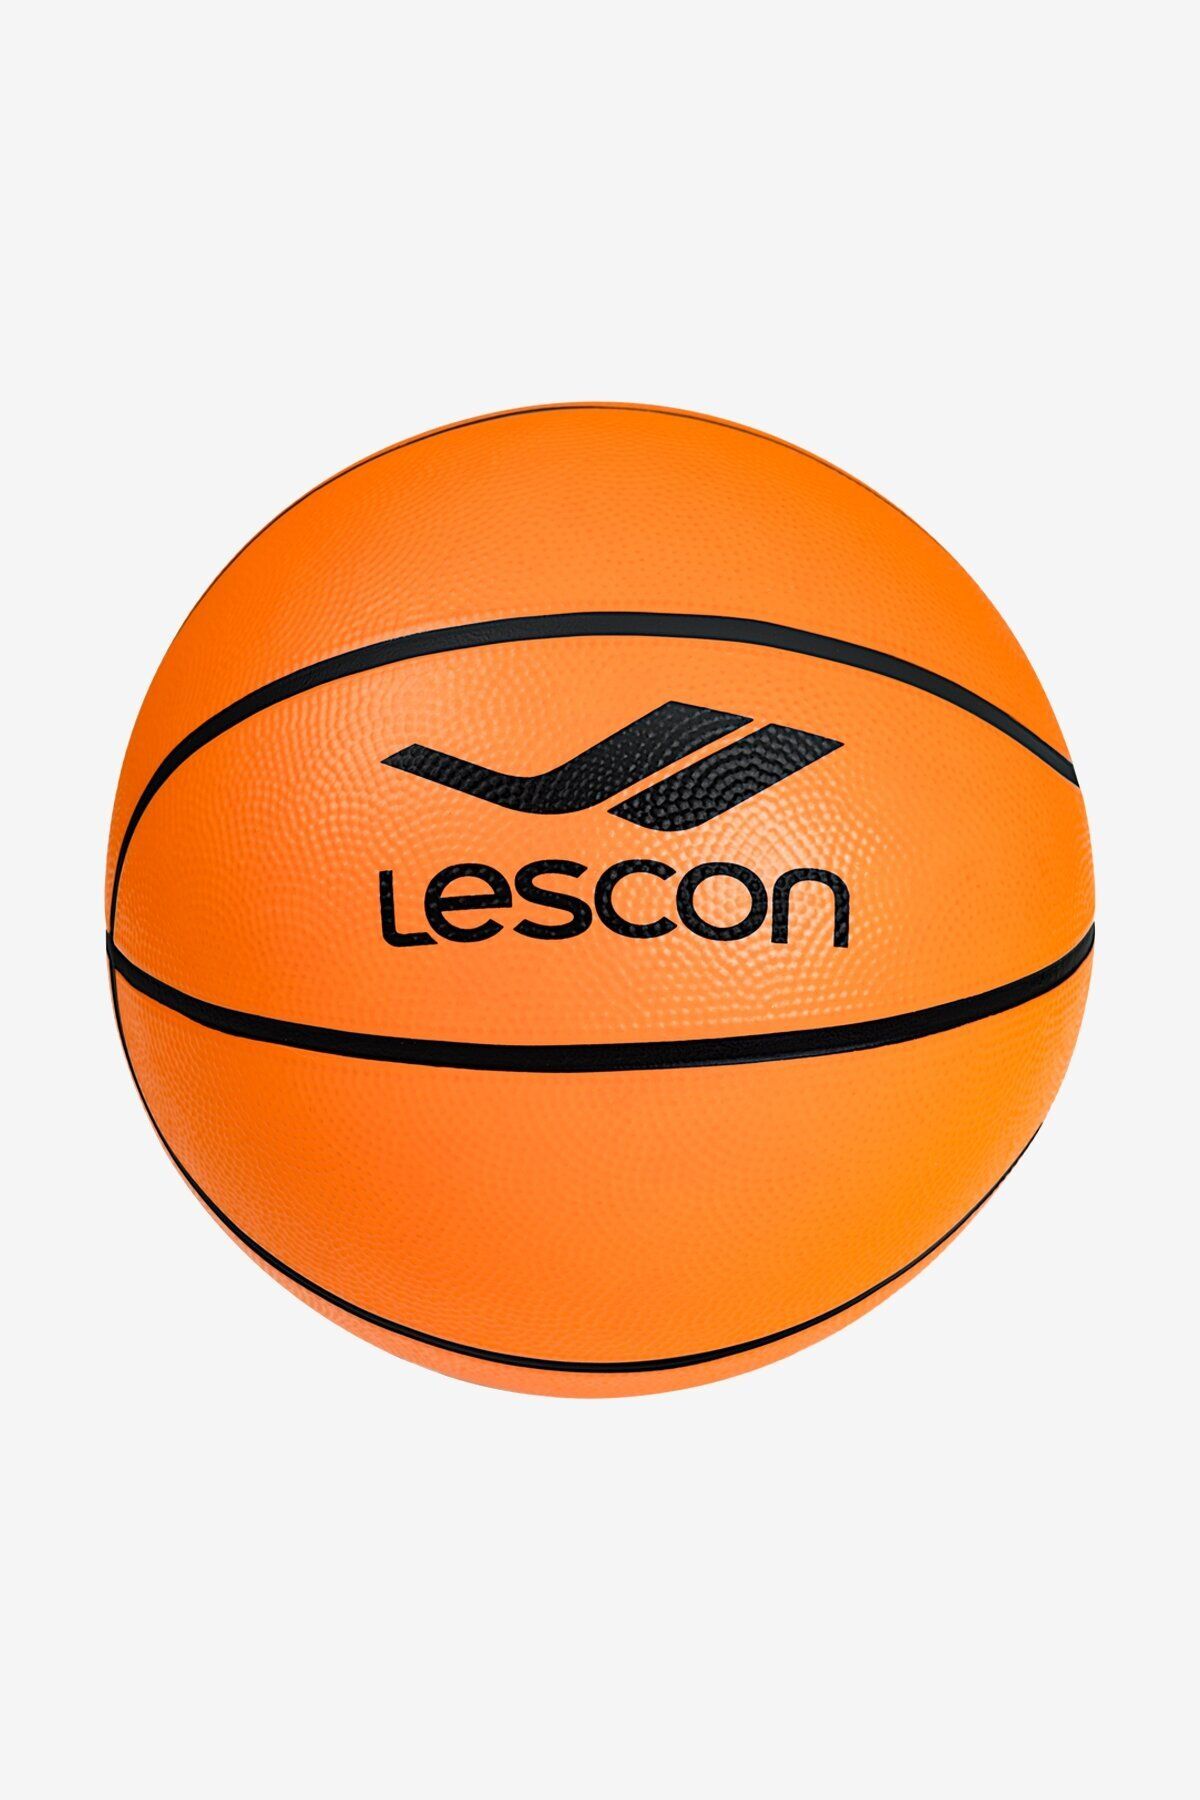 Lescon Basic Basketbol Topu 5 Standart La-3511